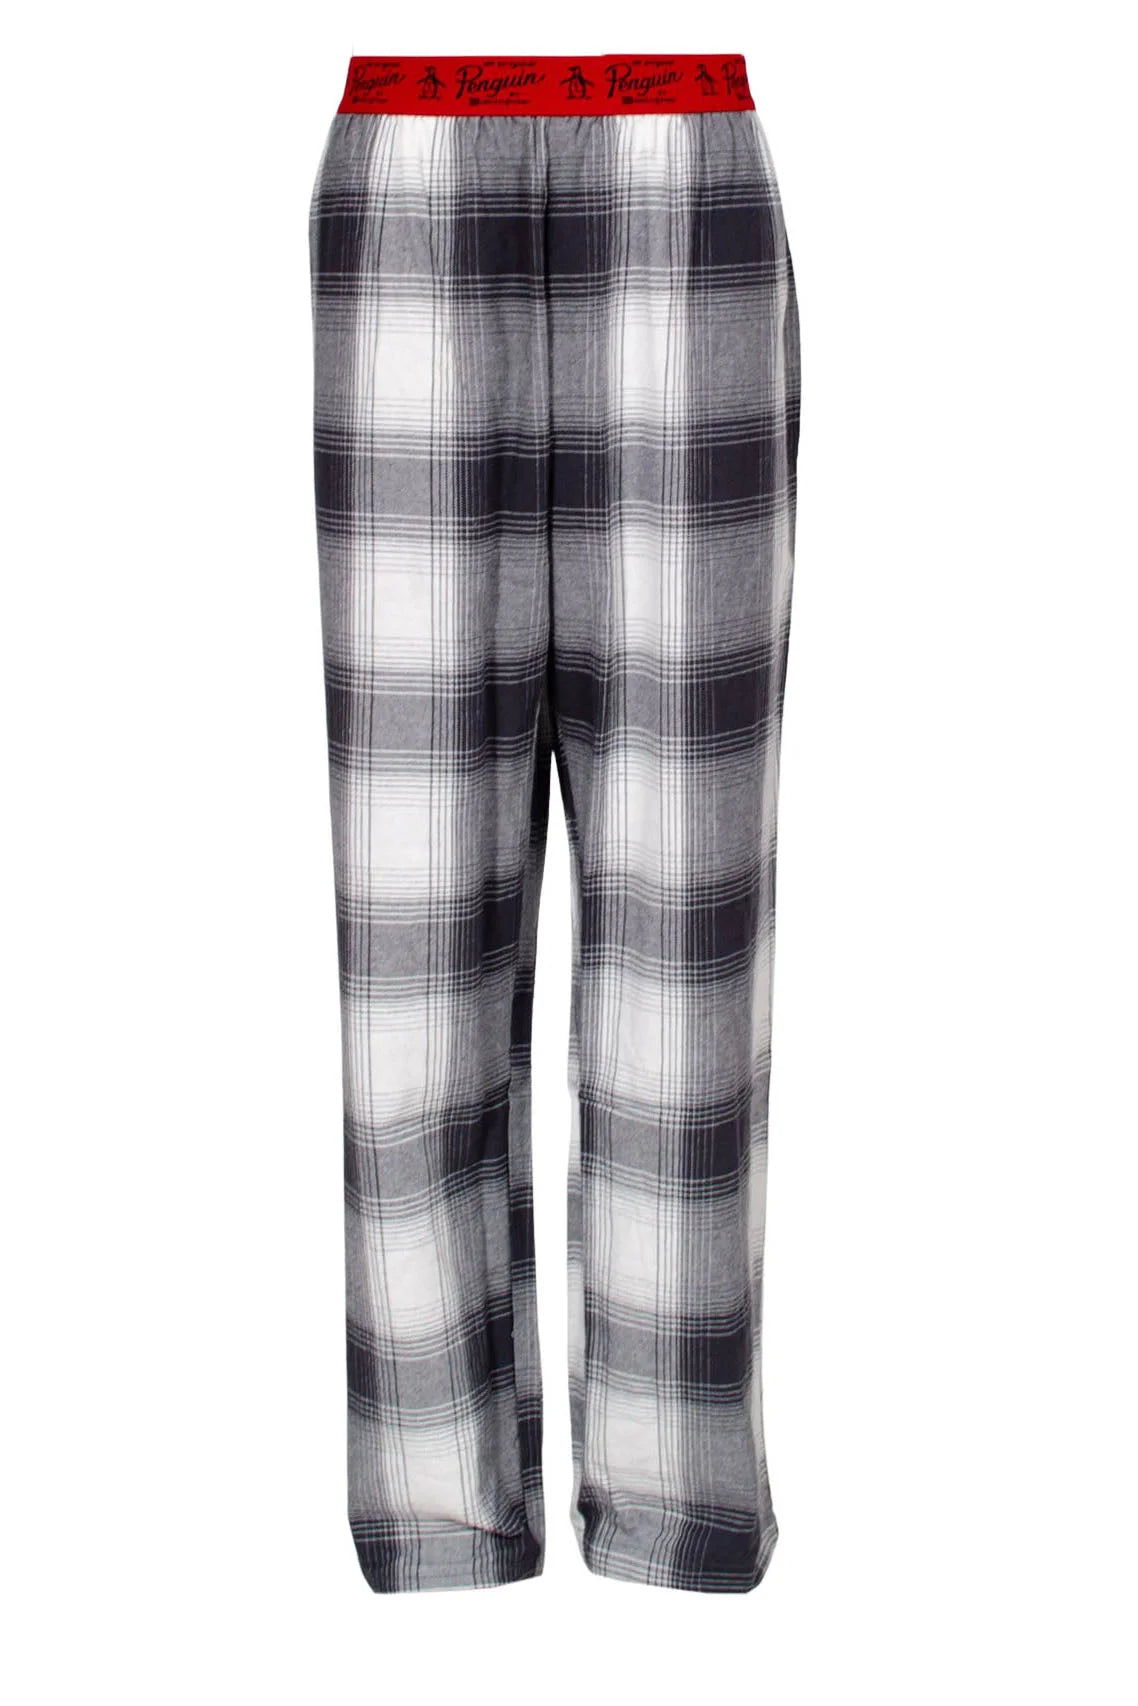 Penguin Cotton Check Pyjama Lounge Pants Grey/White / M